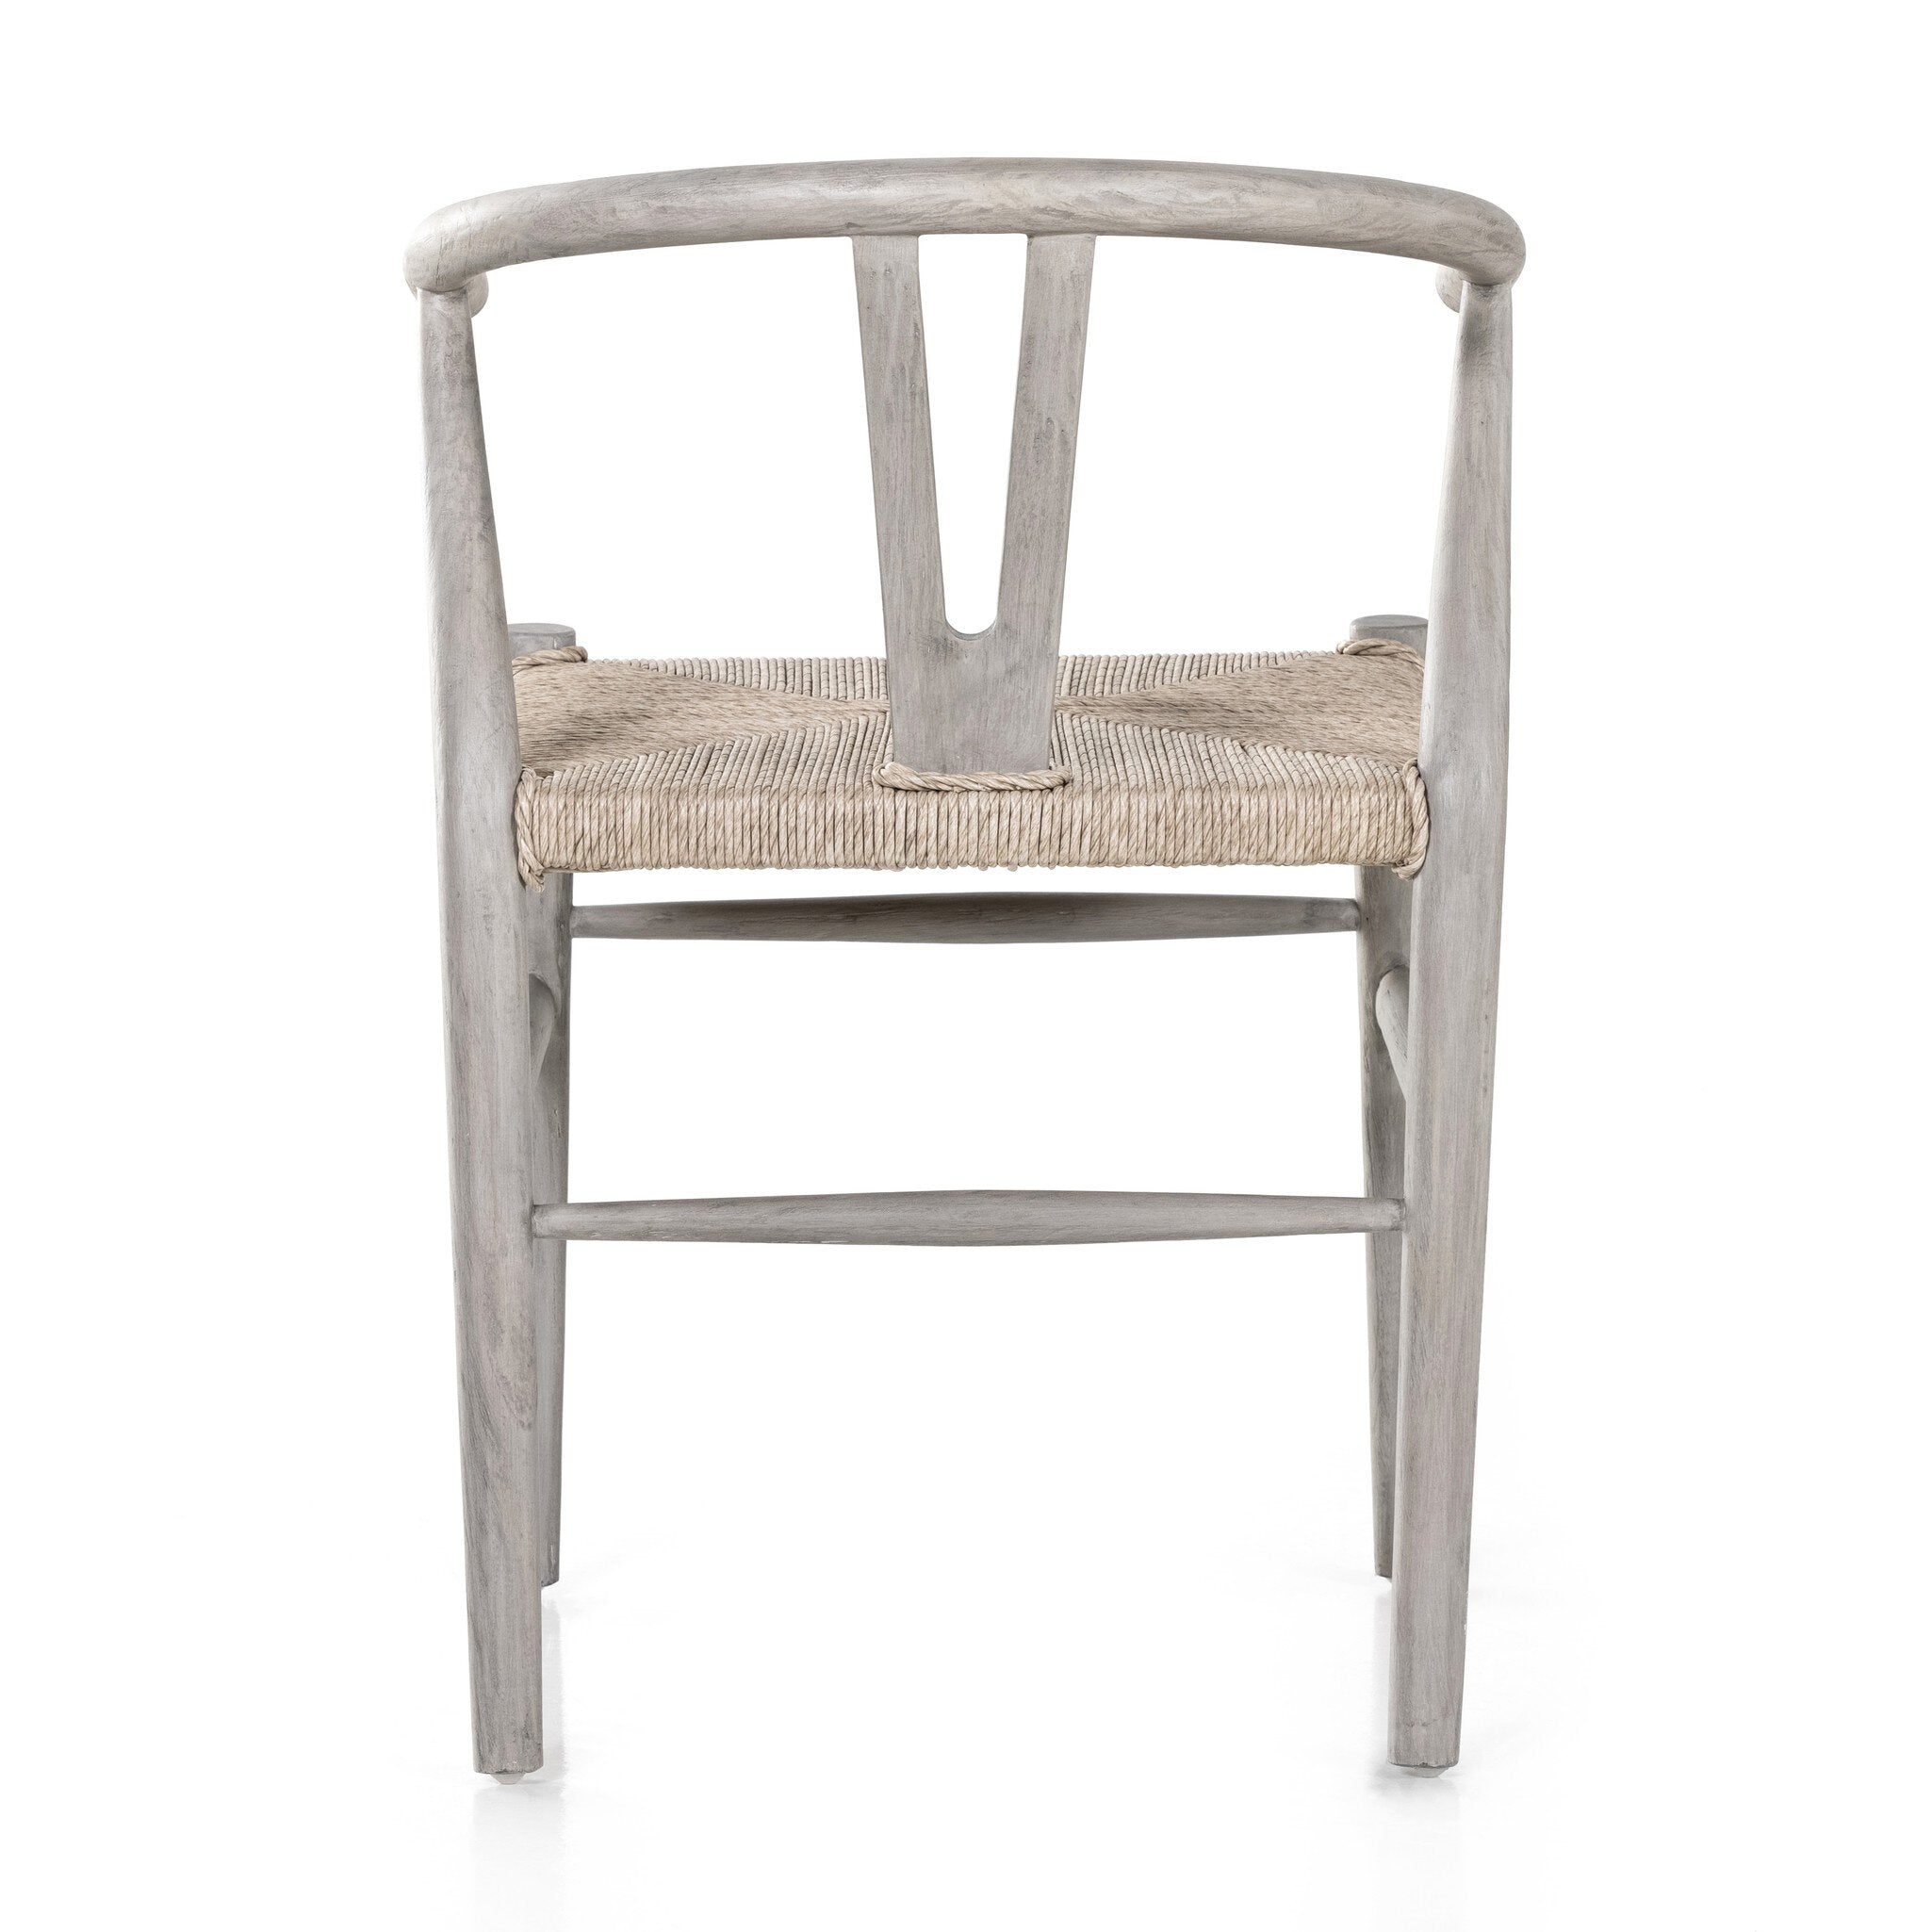 Muestra Dining Chair - Vintage White